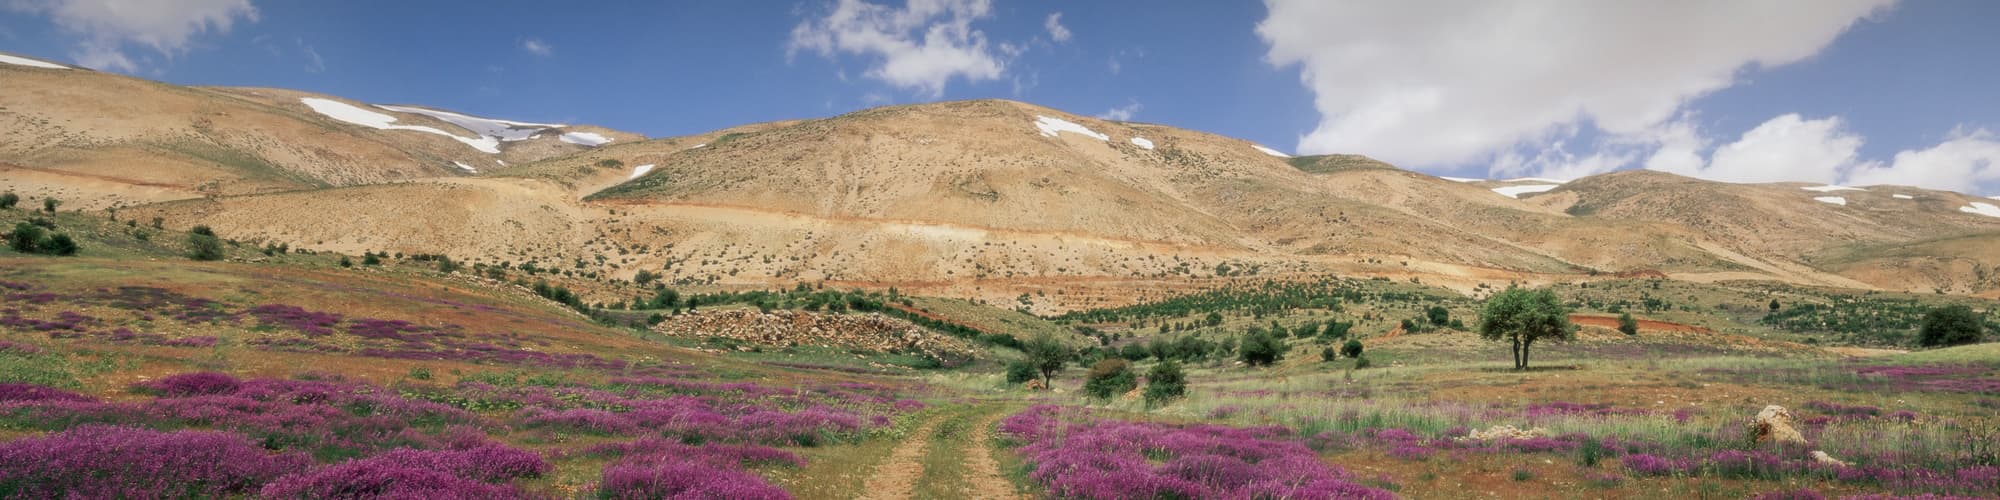 Randonnée Liban © robertharding / Adobe Stock